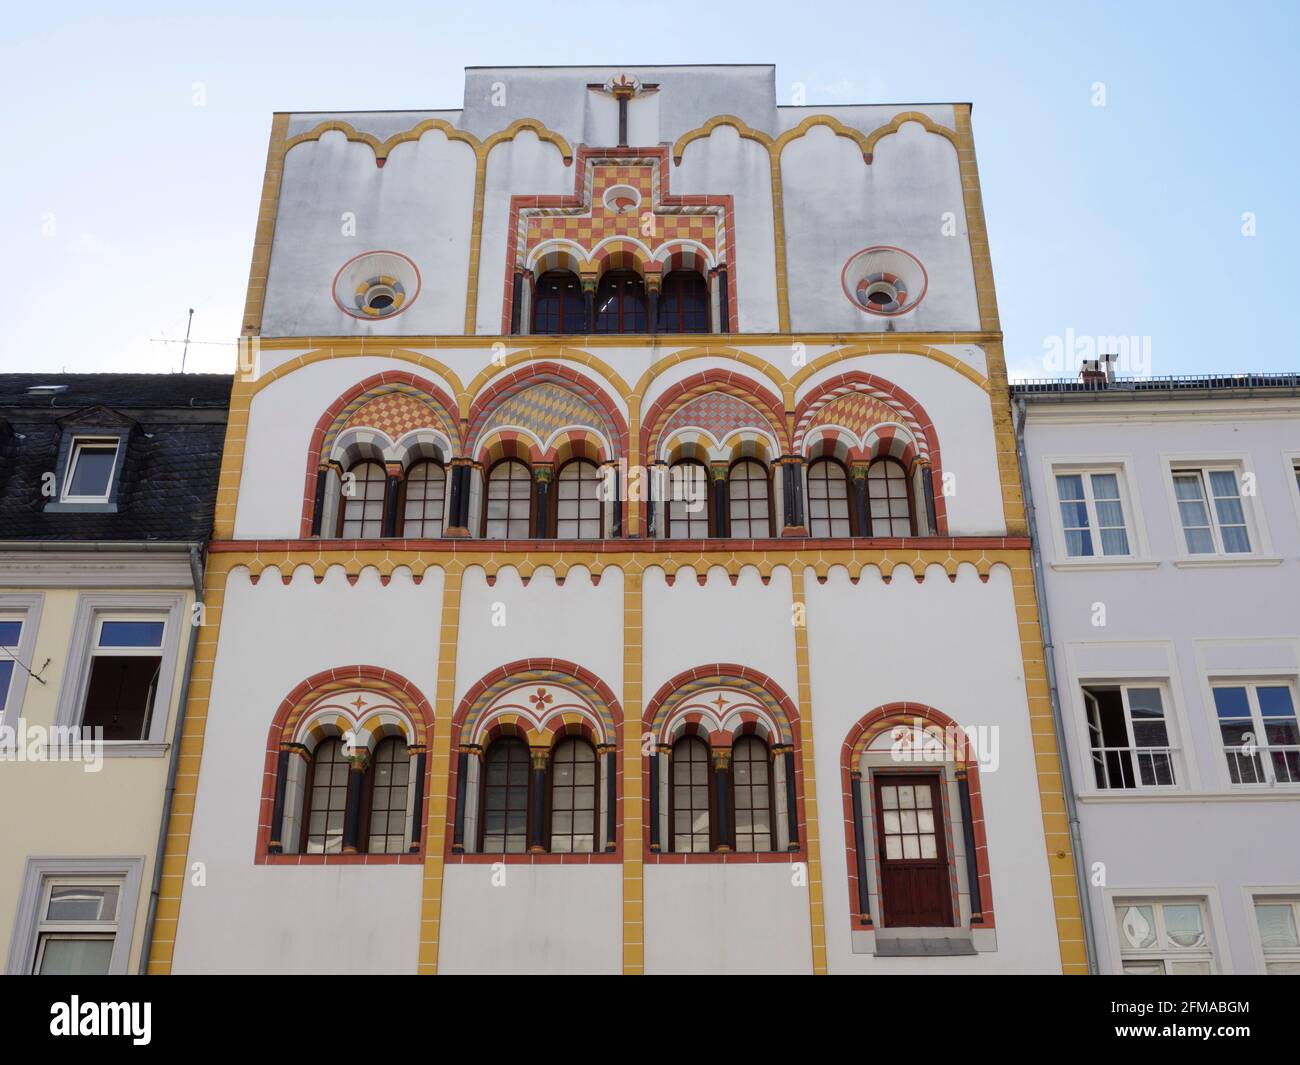 Dreikönigenhaus, Trier, UNESCO World Heritage, Rhineland-Palatinate, Germany Stock Photo